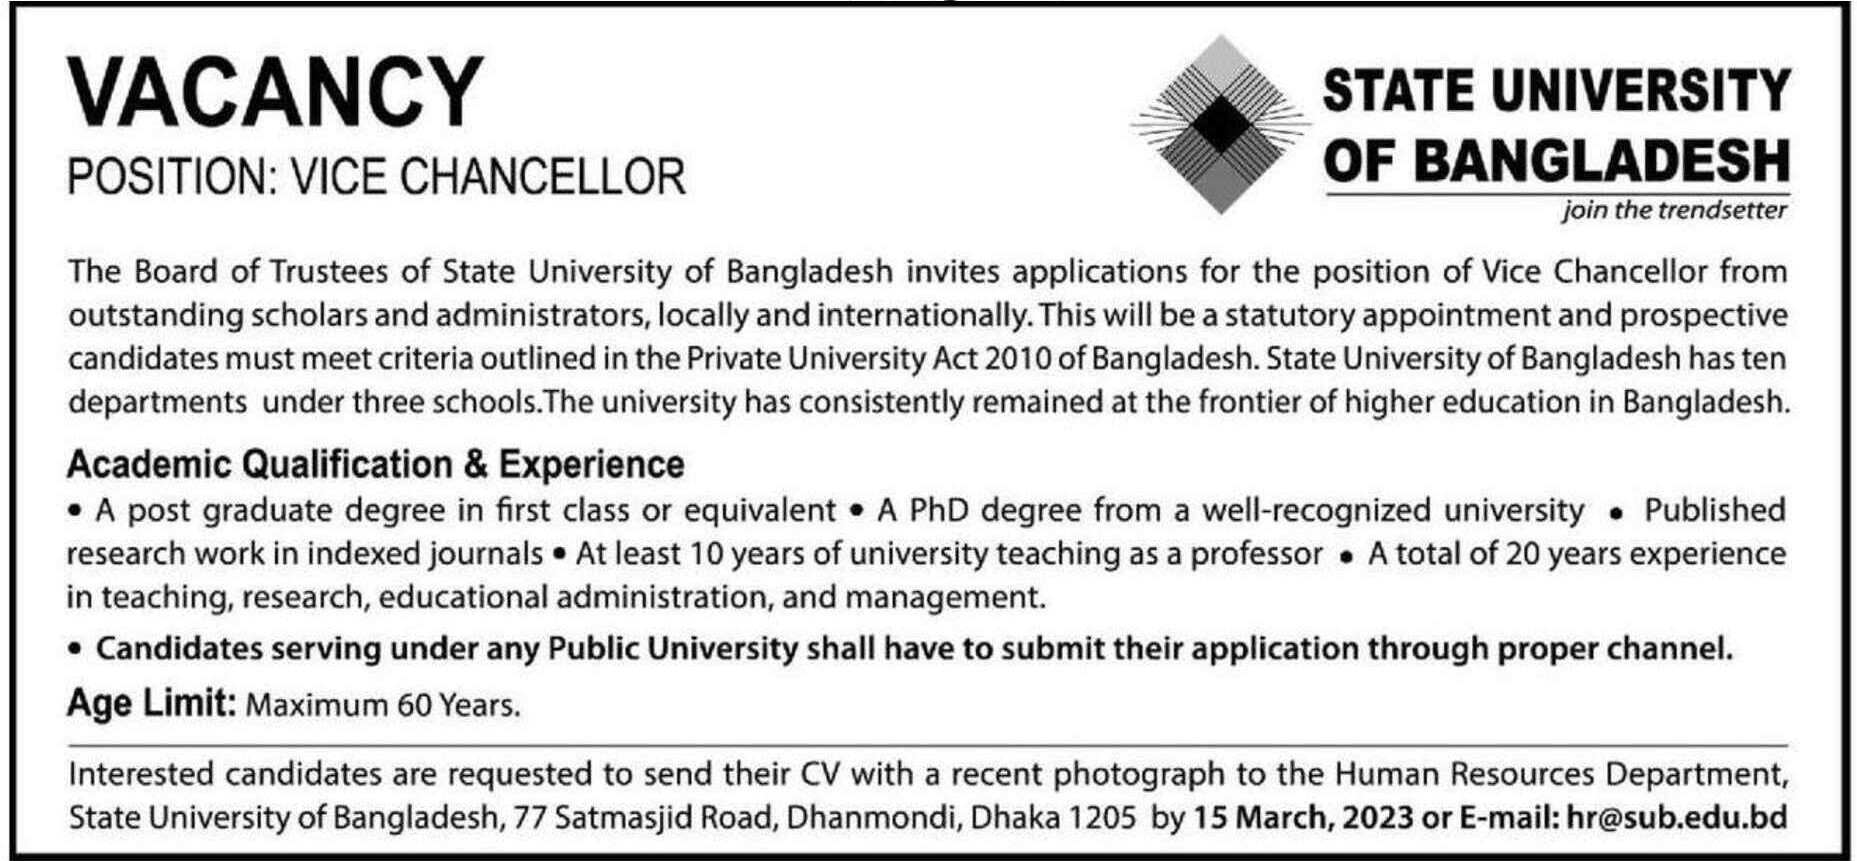 Private University job circular for State University